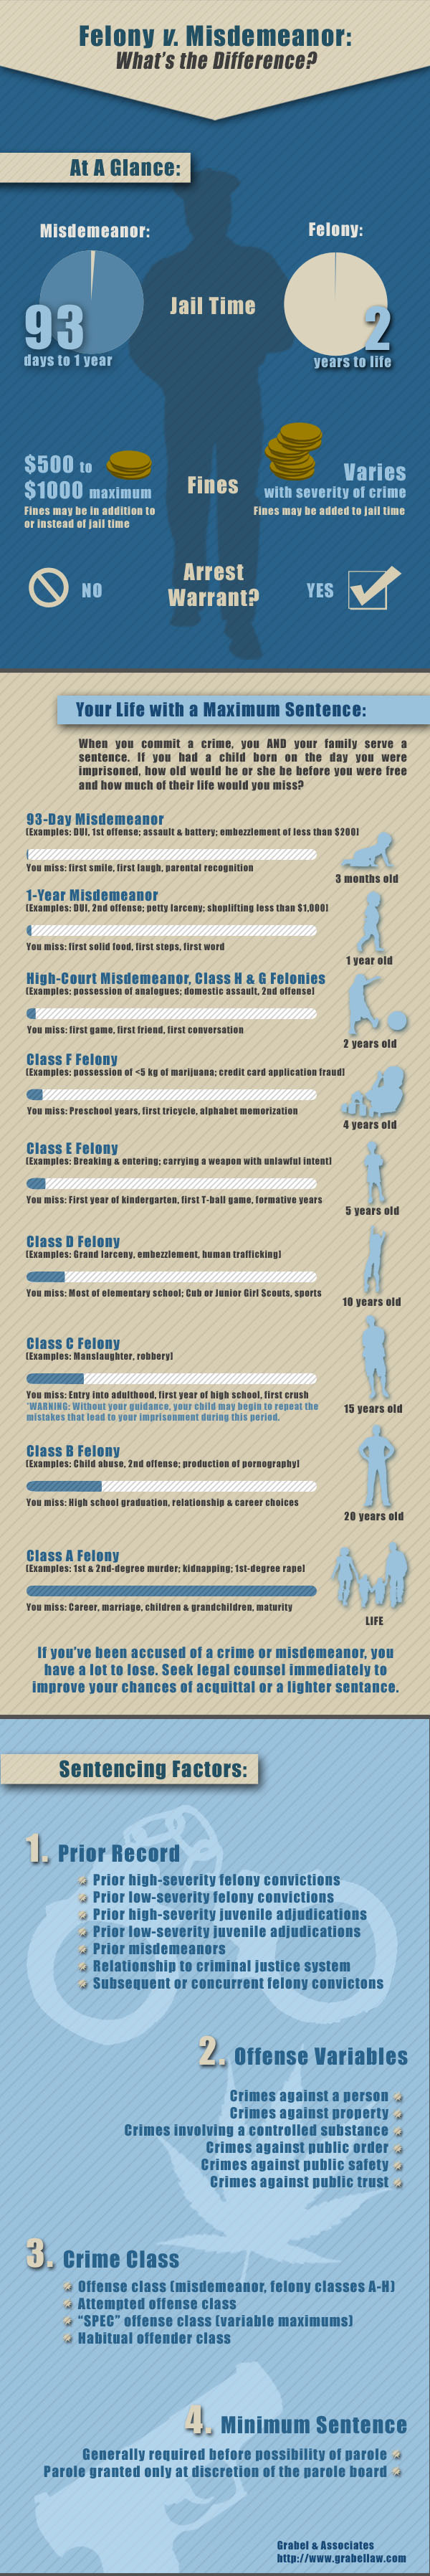 Felony vs Misdemeanor Infographic